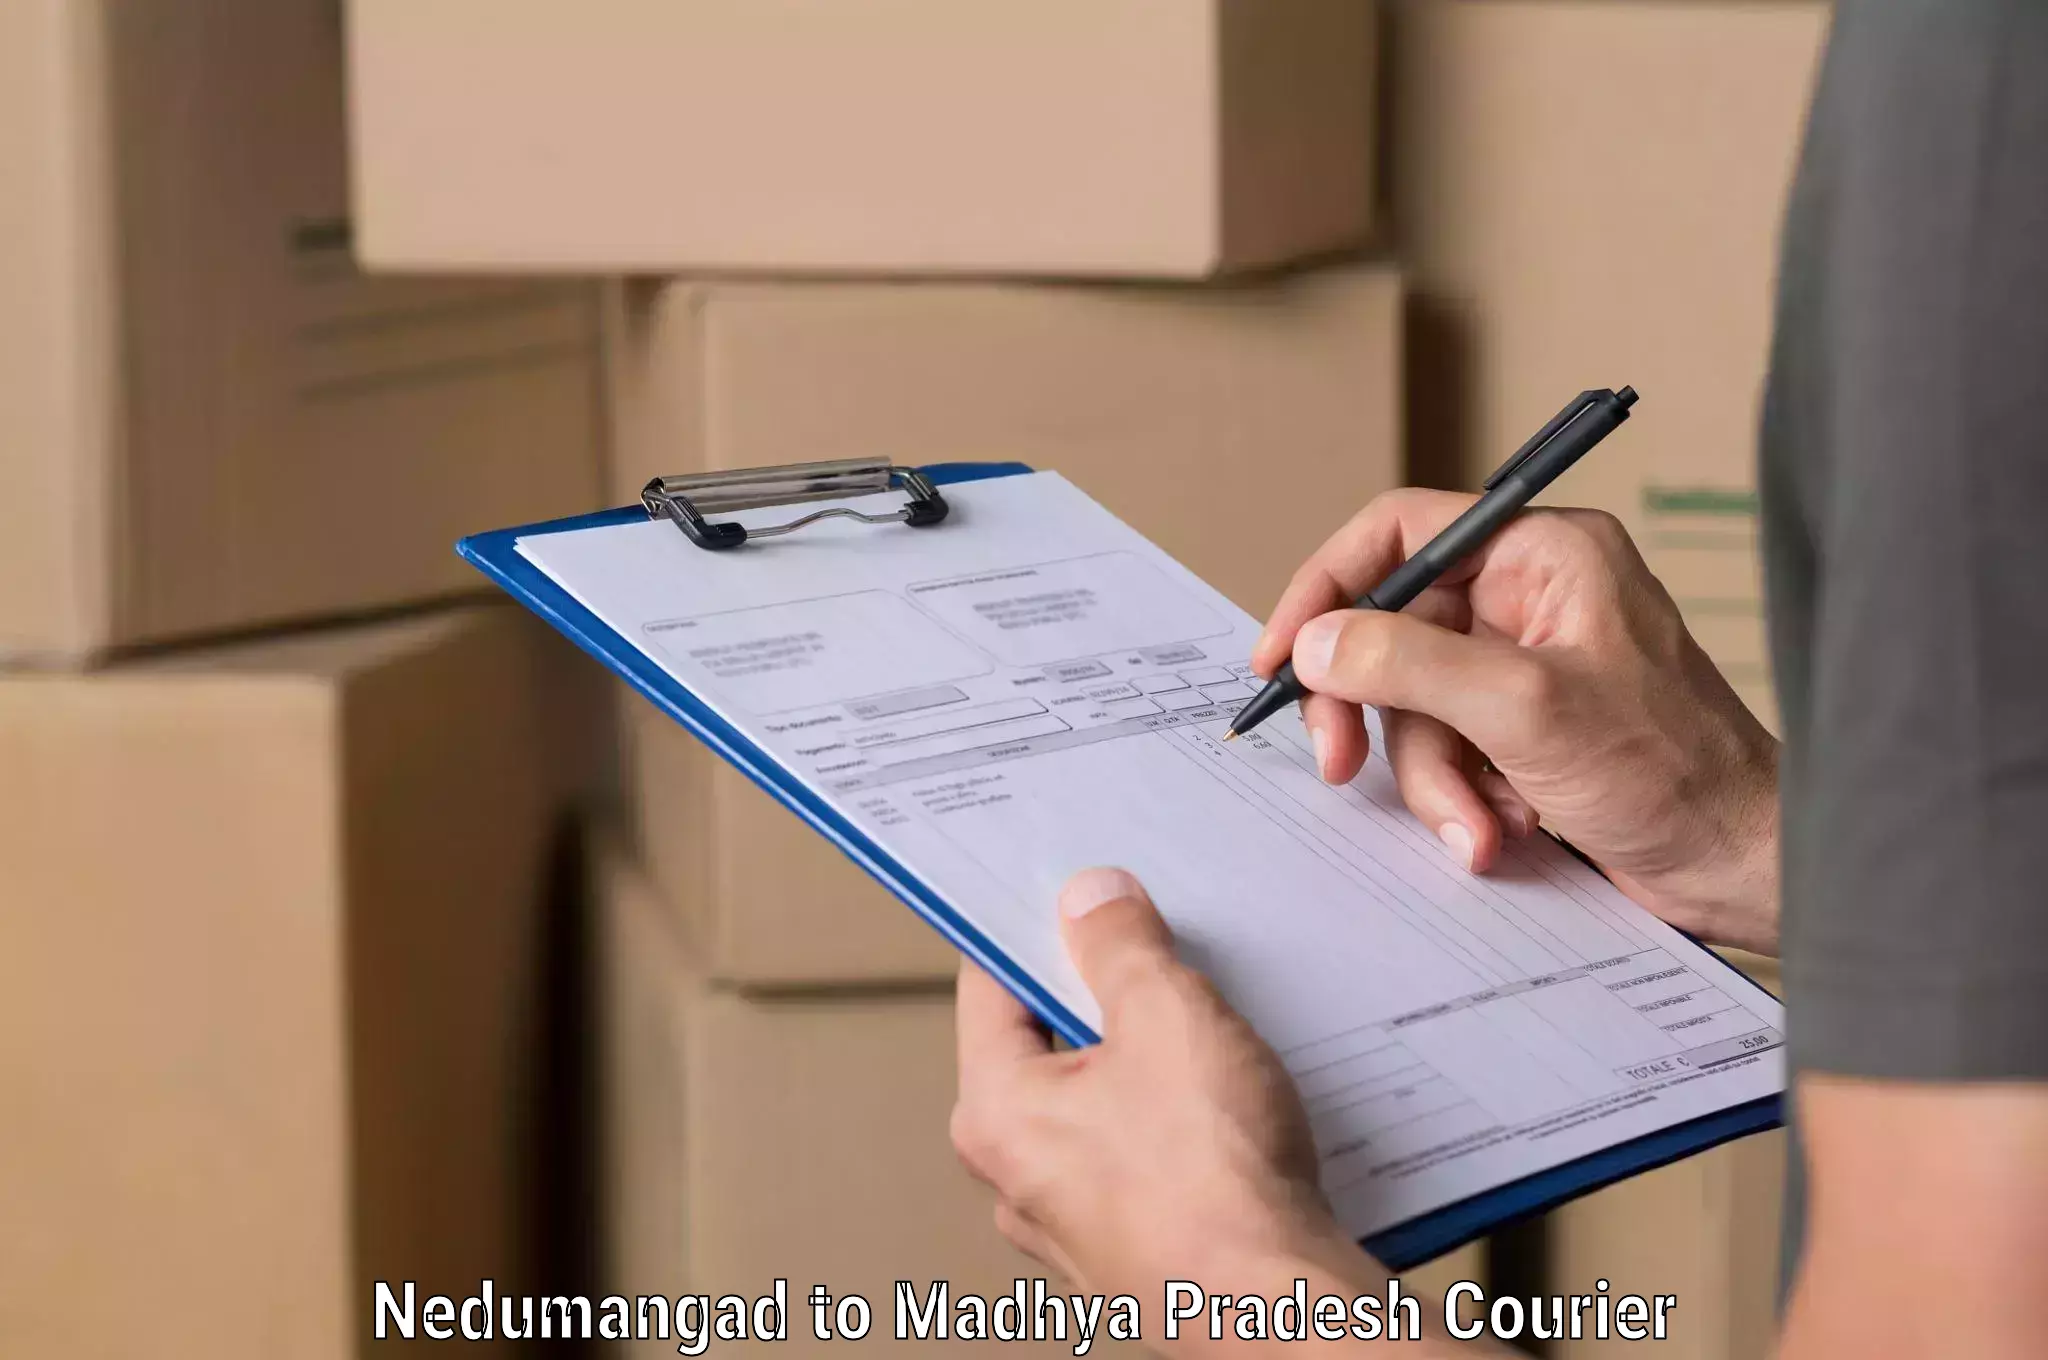 Courier service comparison Nedumangad to Tikamgarh